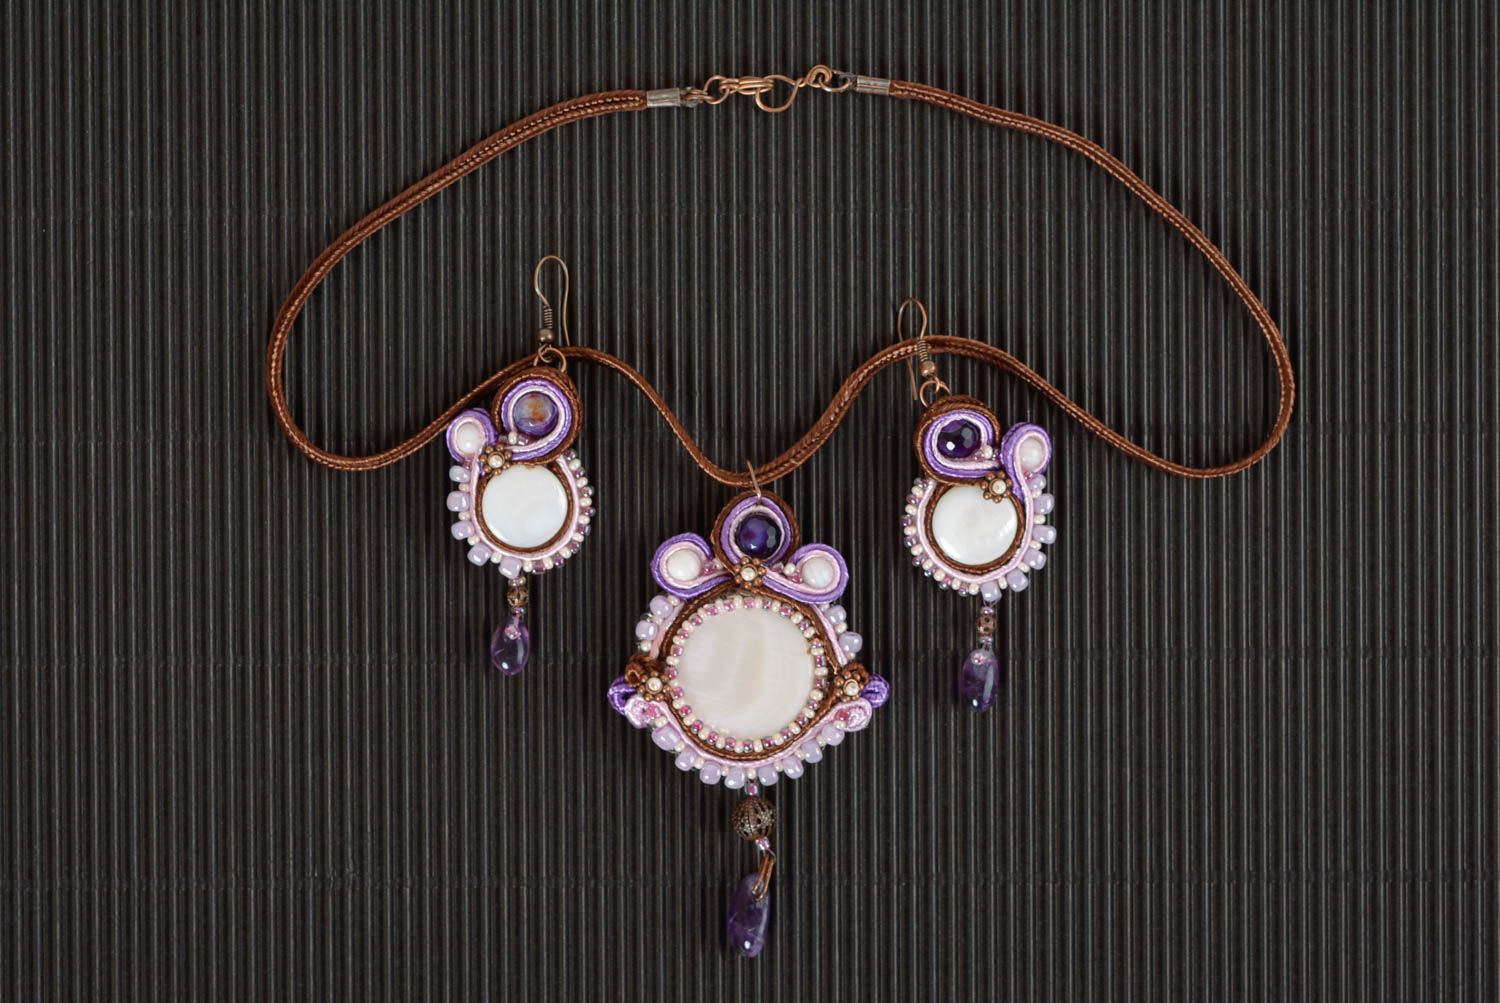 Handmade soutache jewelry soutache pendant and earrings stylish accessories photo 1